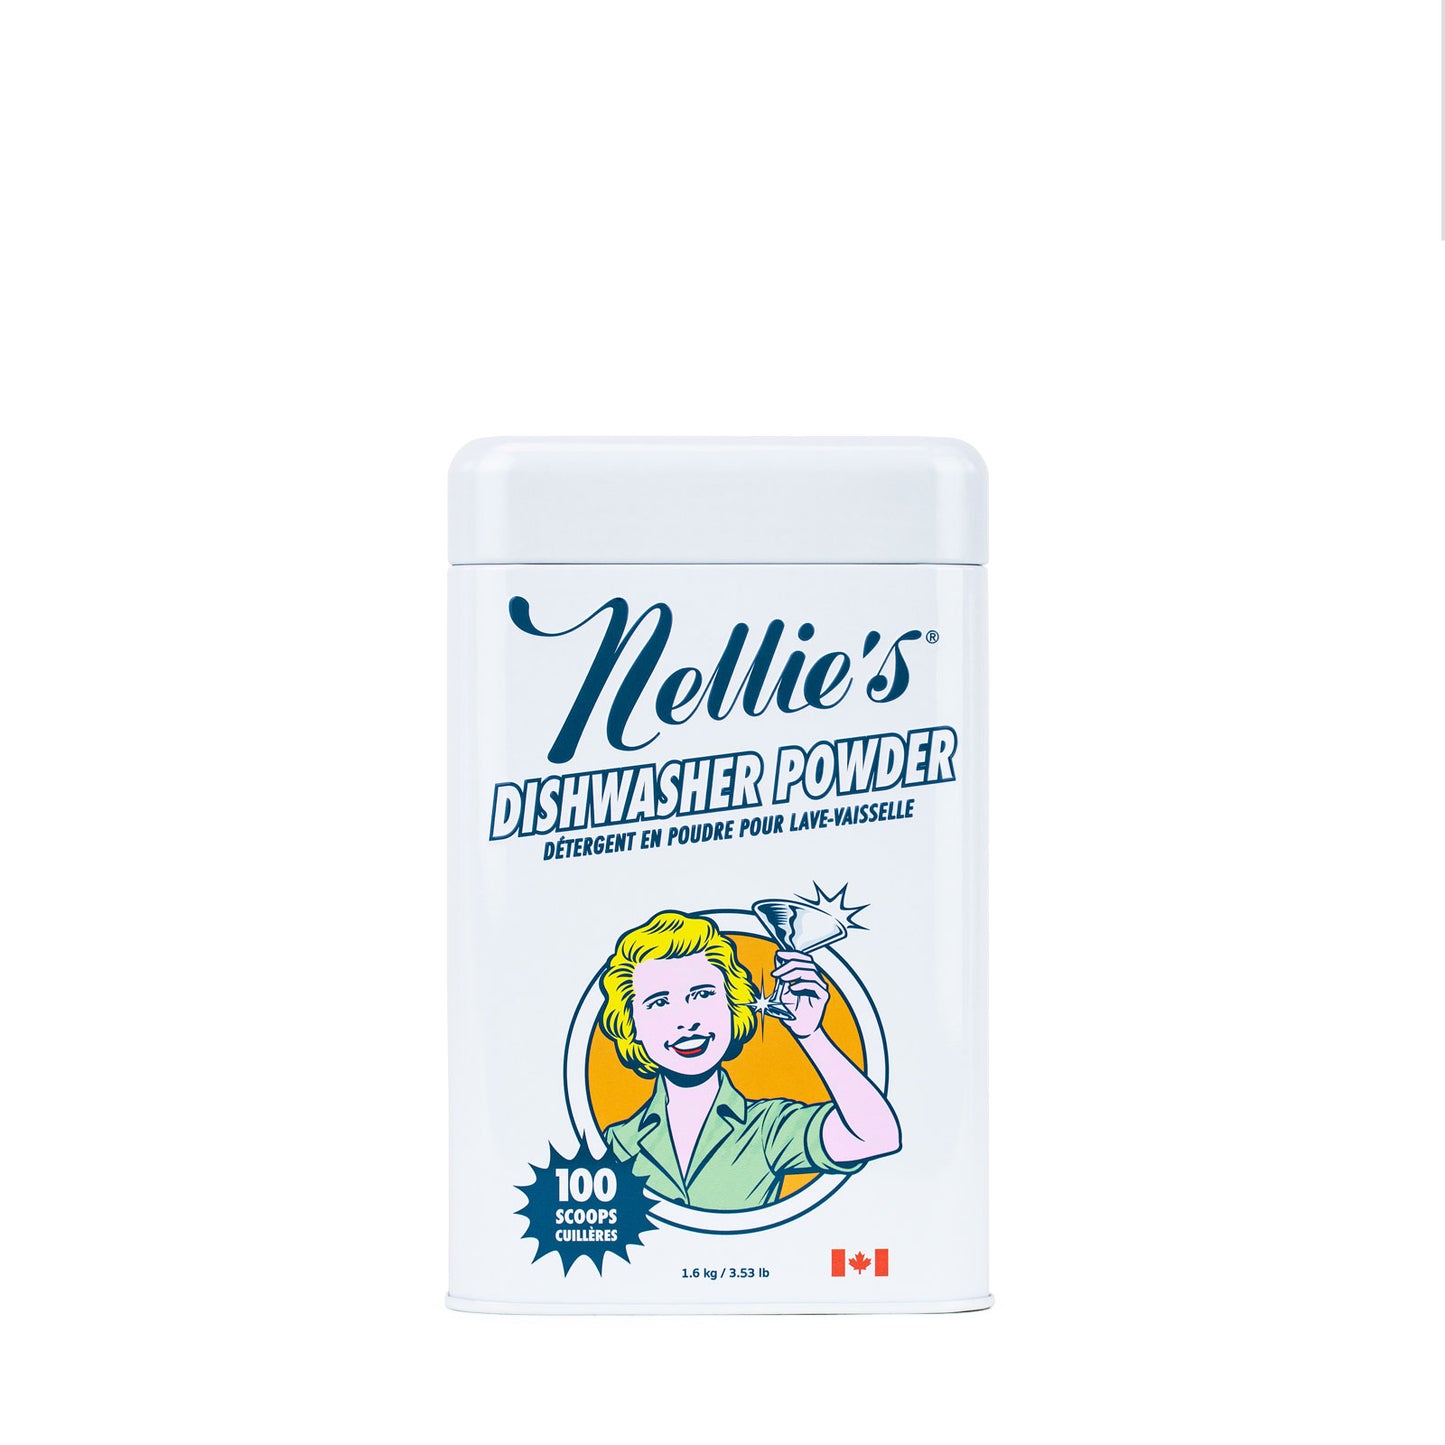 Nellie's Dishwasher Powder, 100 scoop Tin- Refillable